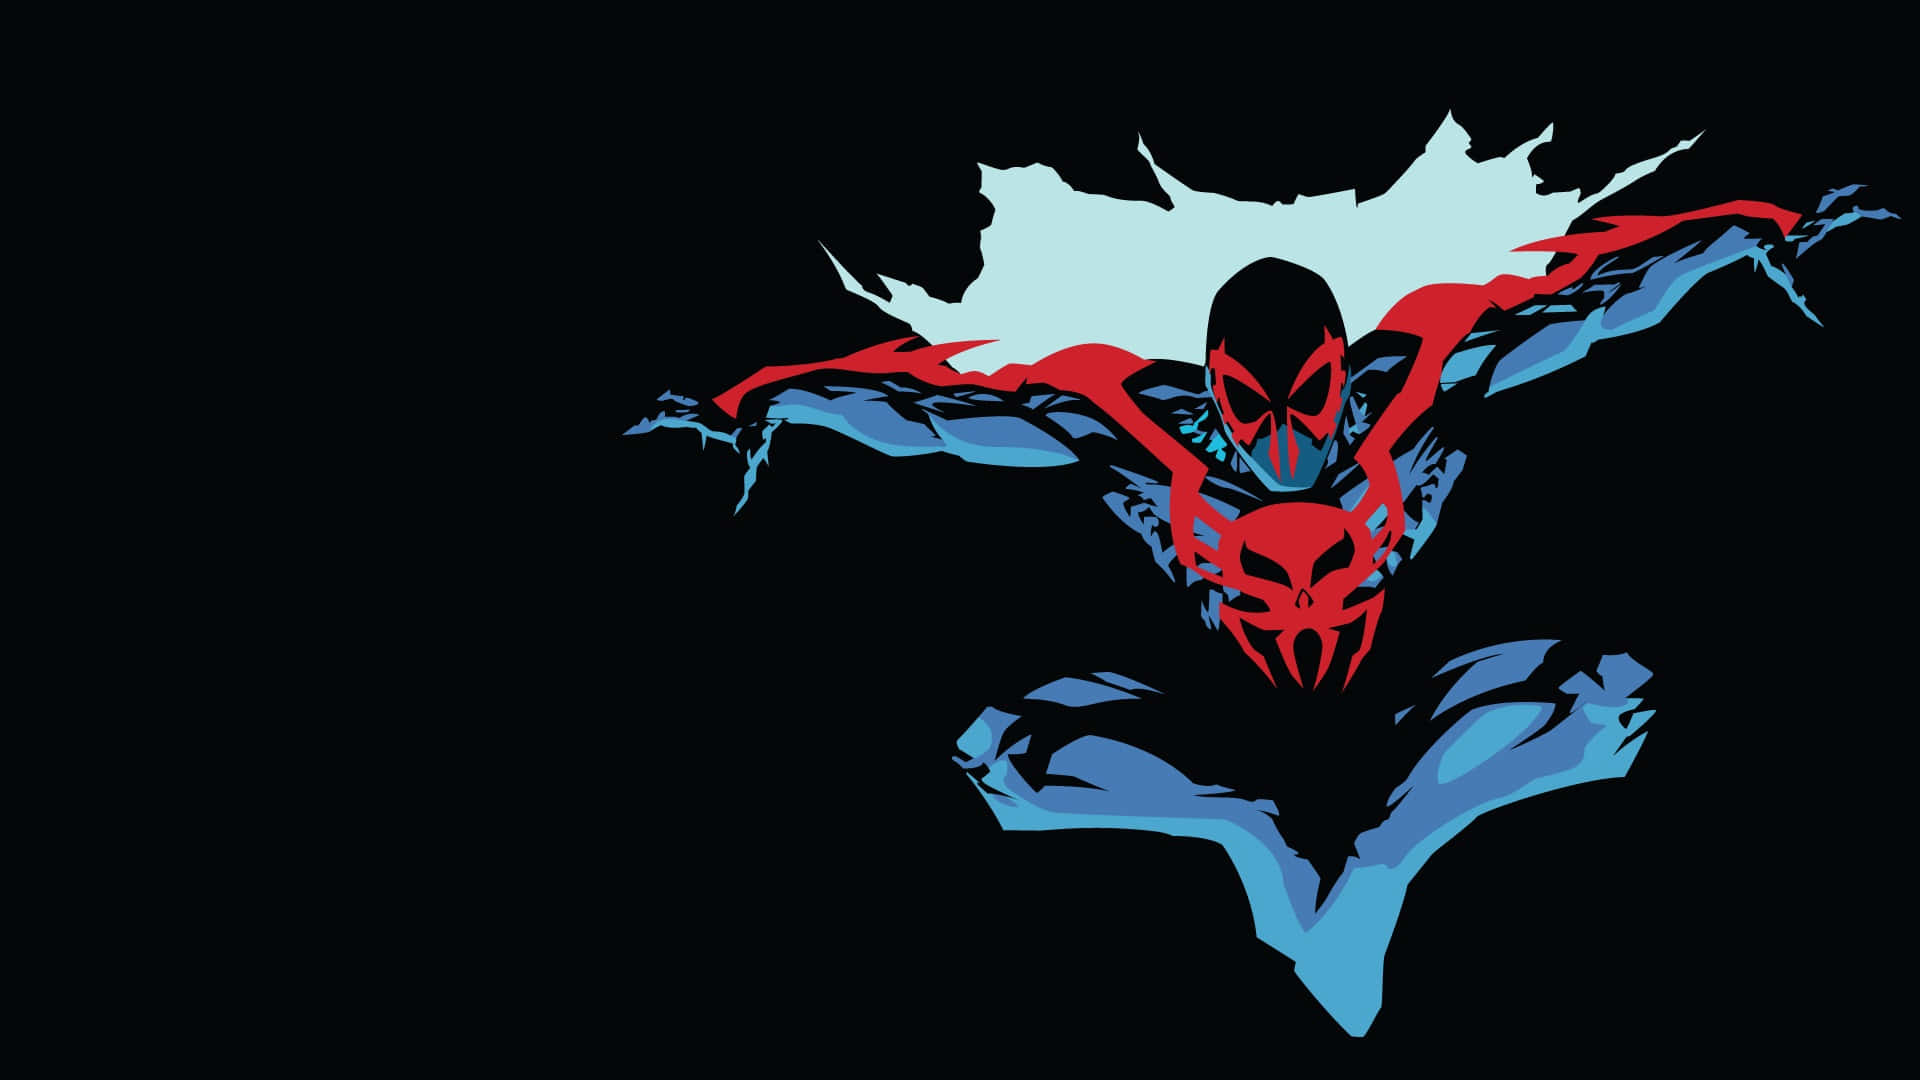 Spider-Man 2099 in Action Wallpaper